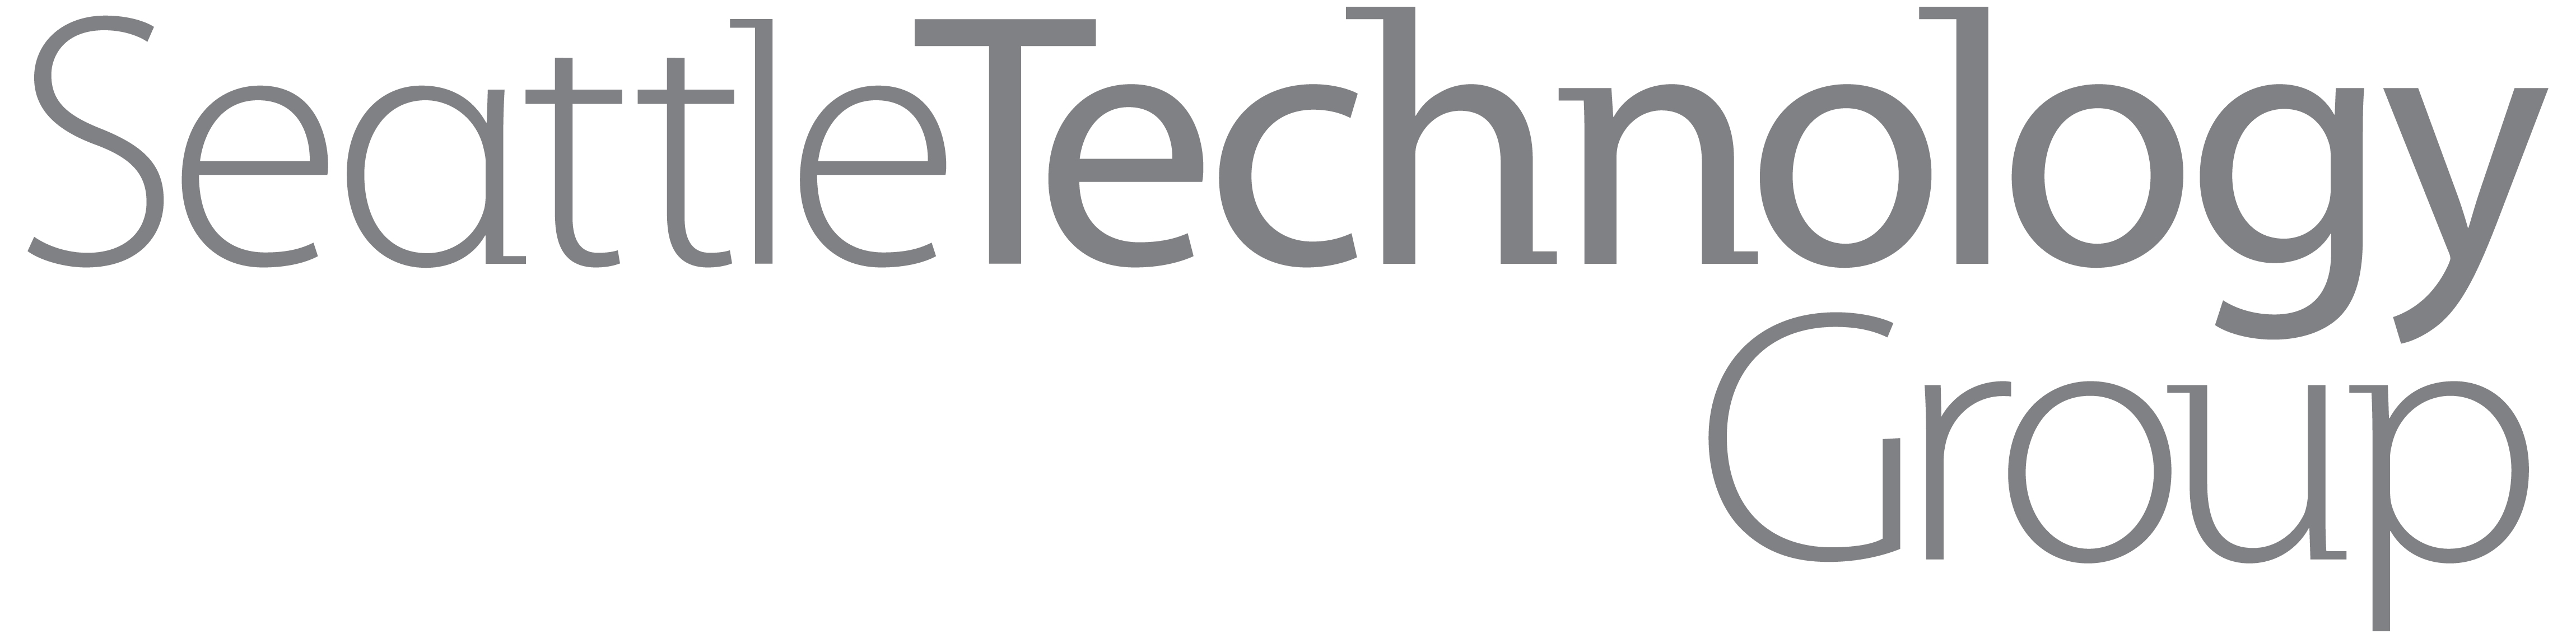 Seattle Technology Group, Inc. logo